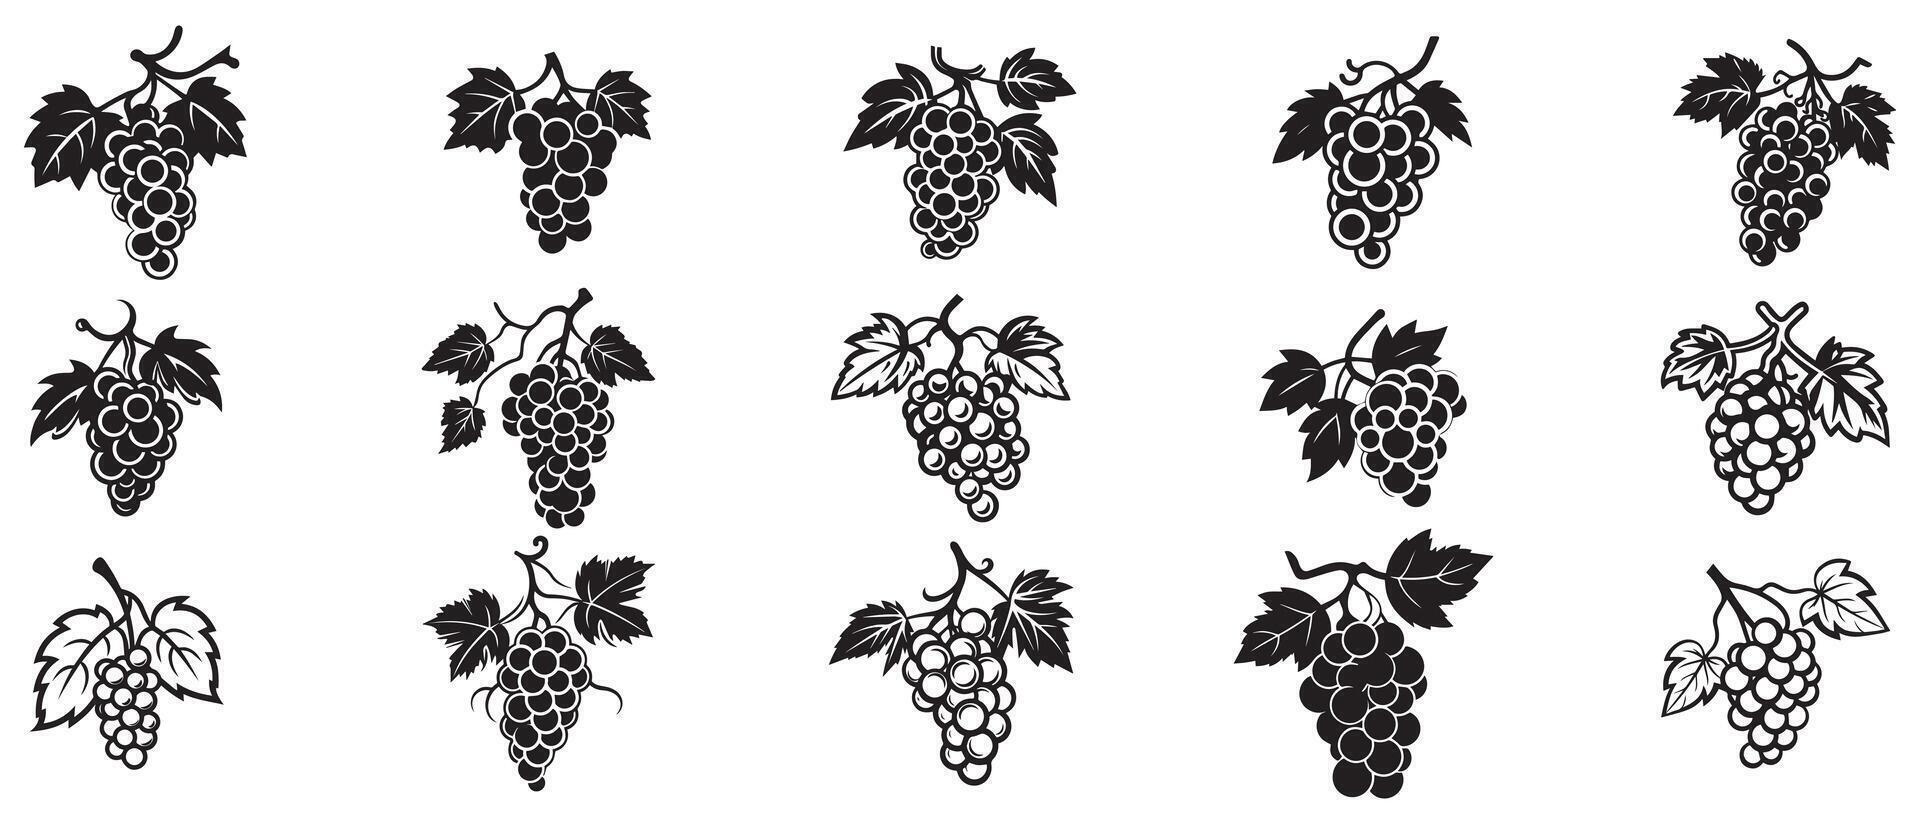 Grape icon black and white background design. silhouette style, vector illustration.